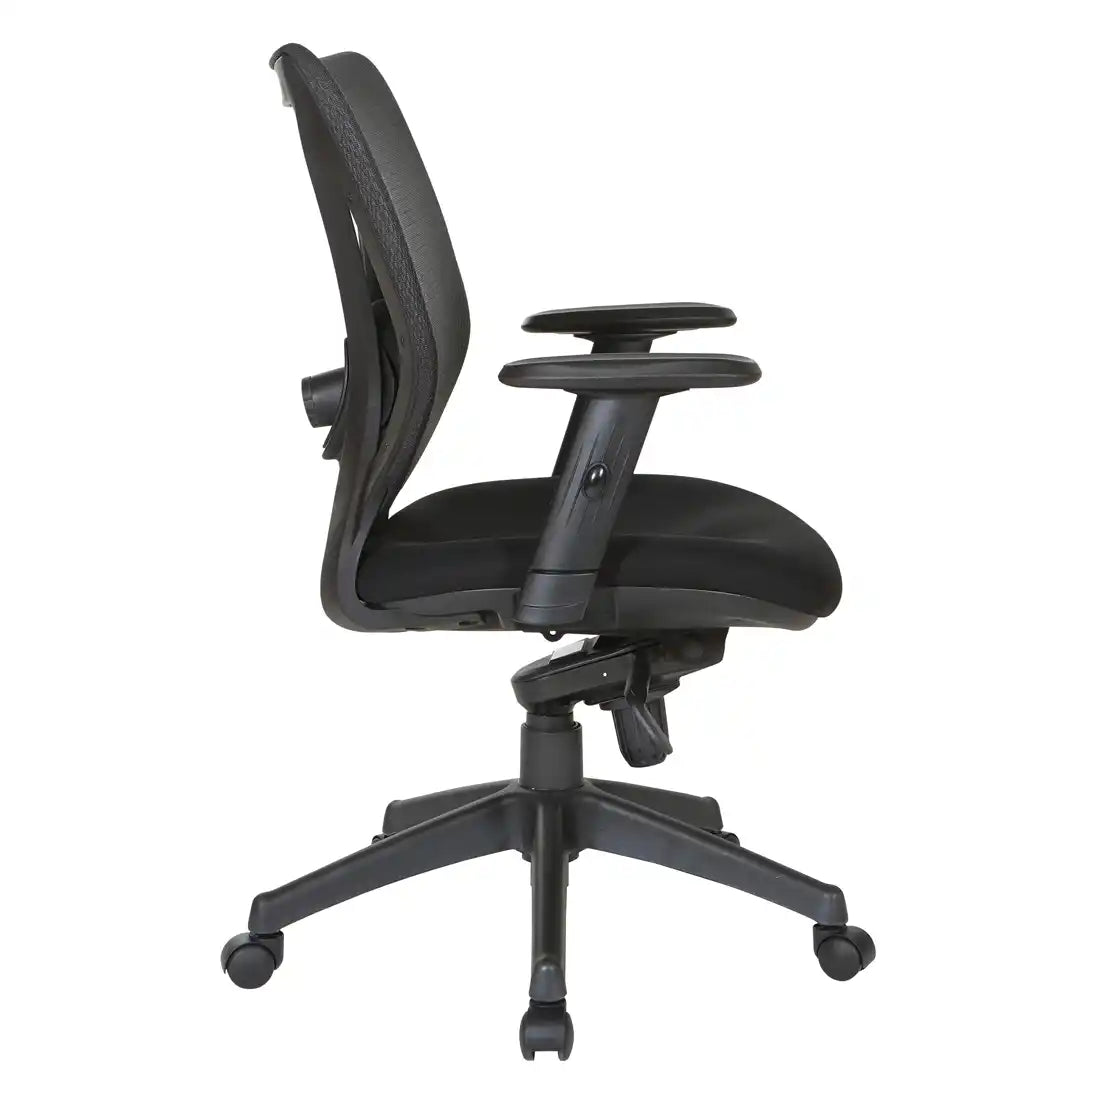 WorkSmart Screen Back Chair - EM98880-F3 - Functional Office Furniture - EM98880-F3